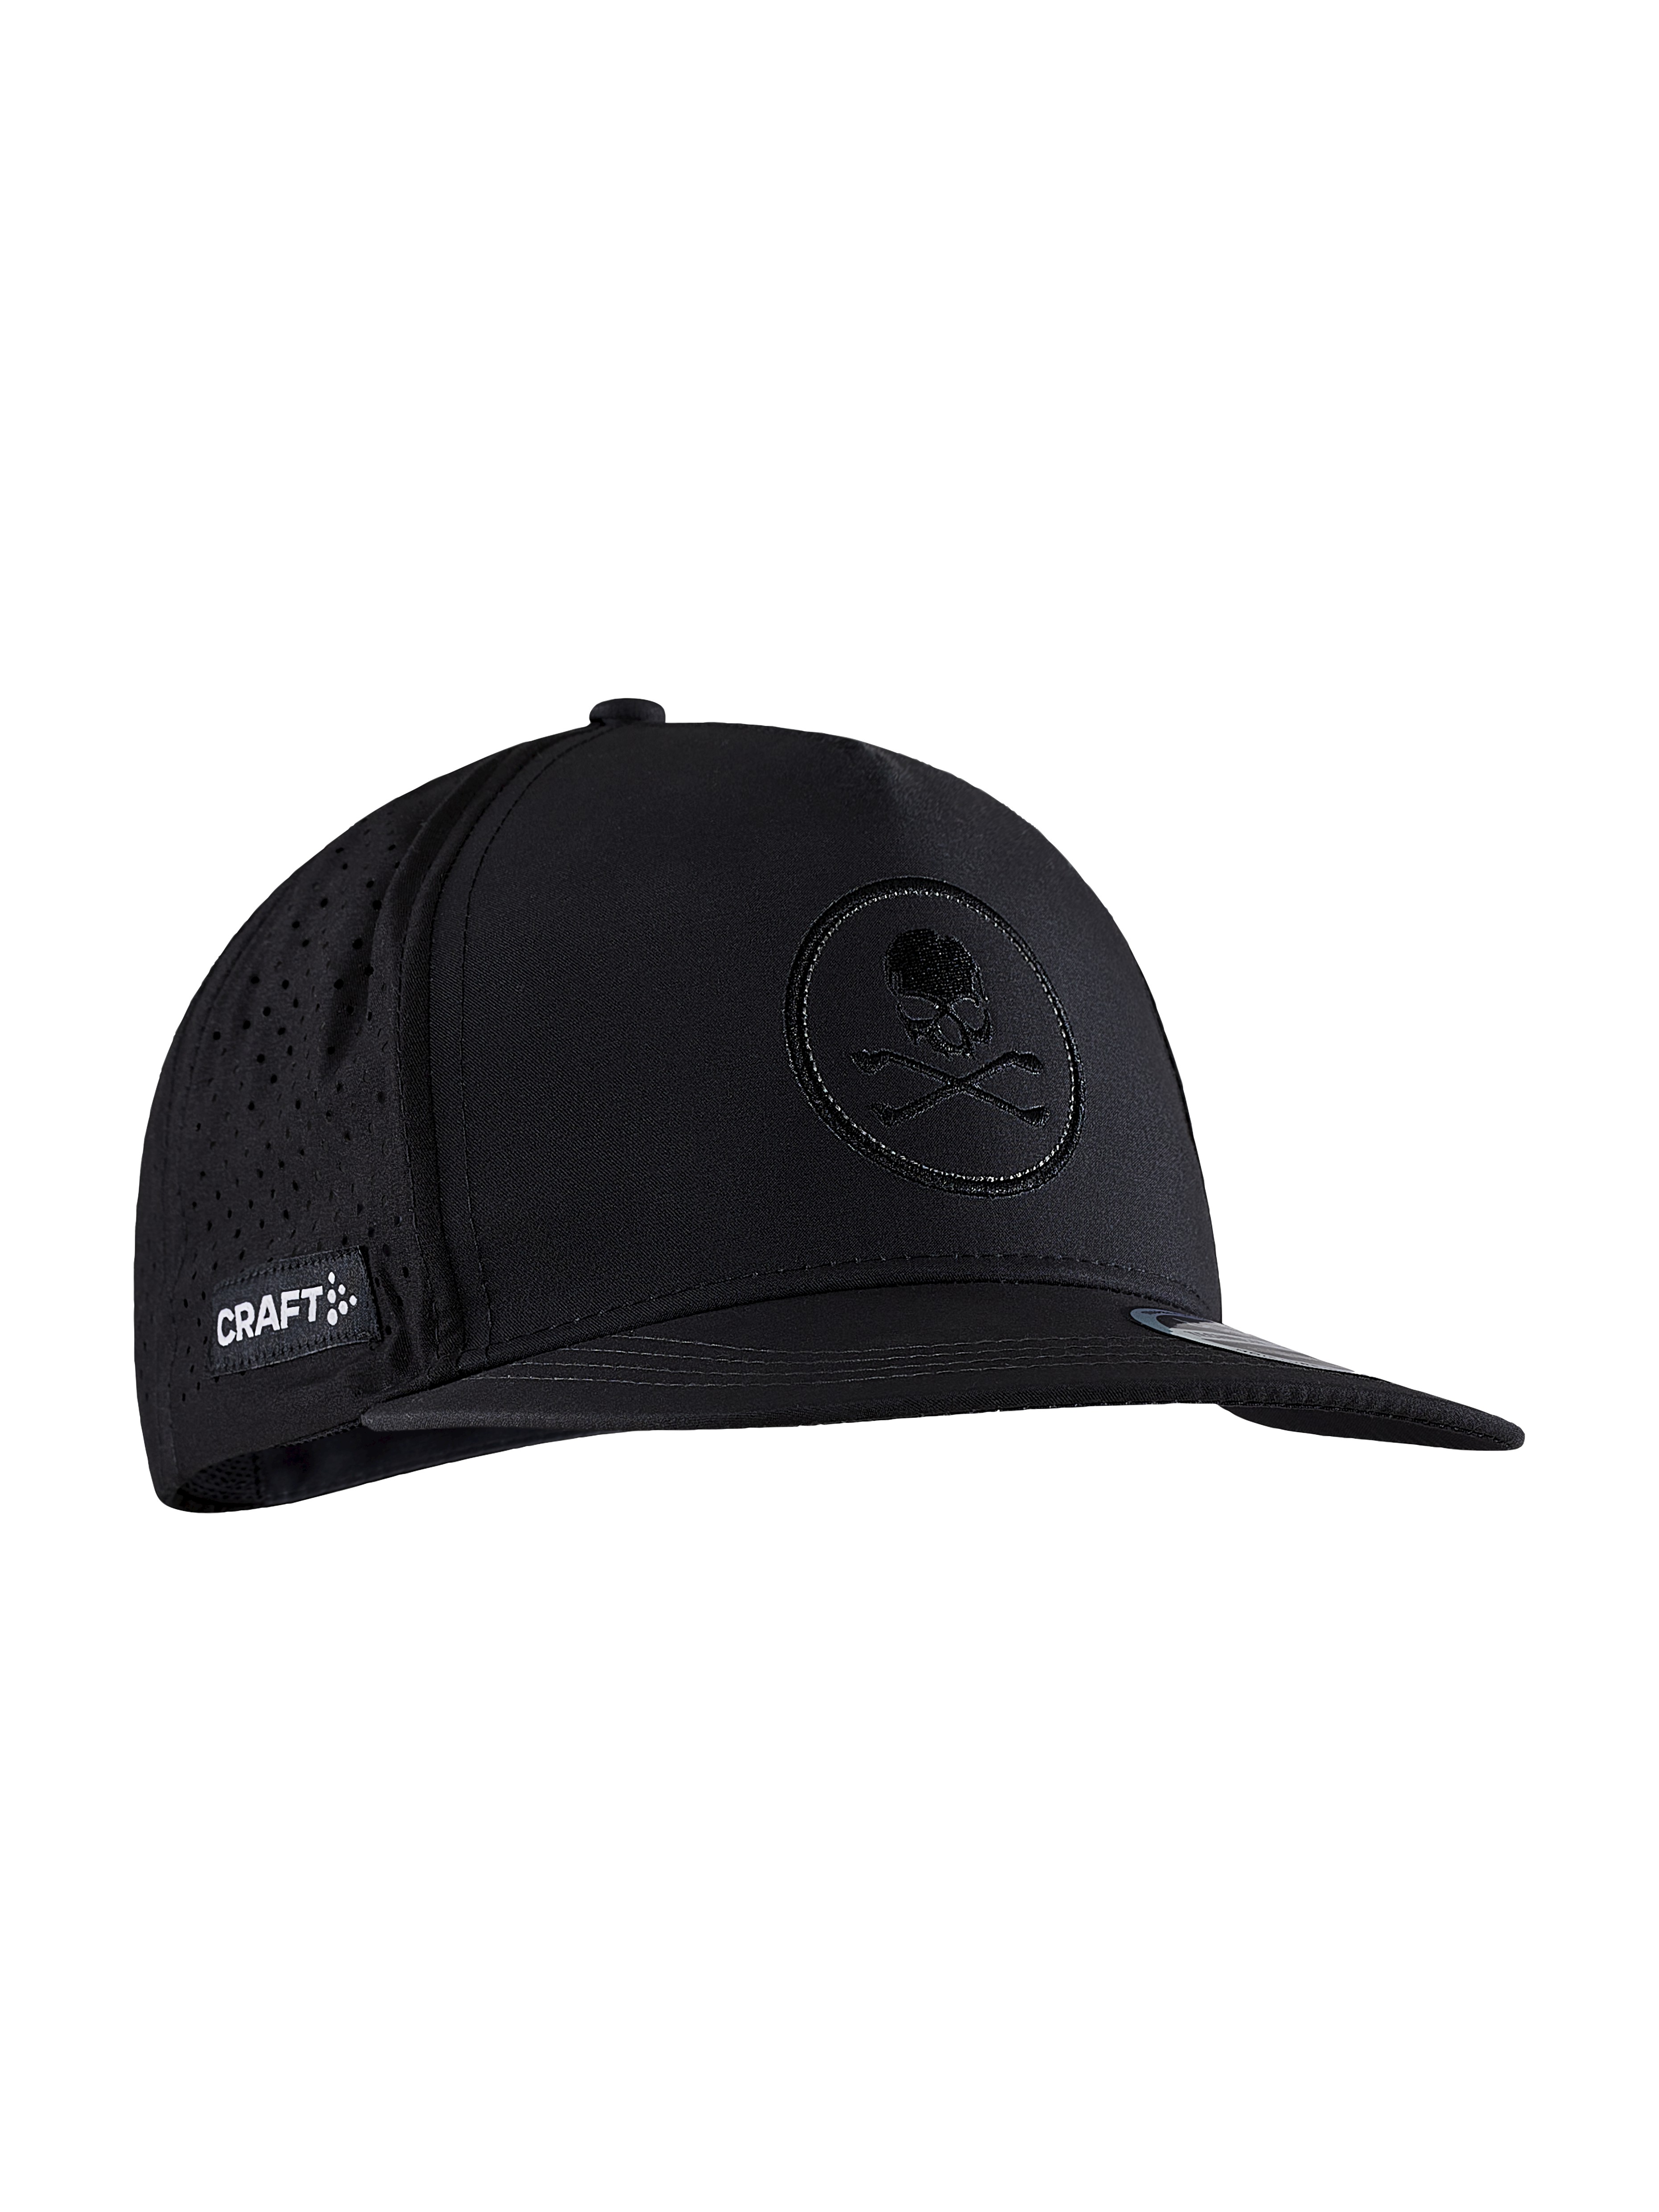 TEAMRIVS CAP - Black | Craft Sportswear